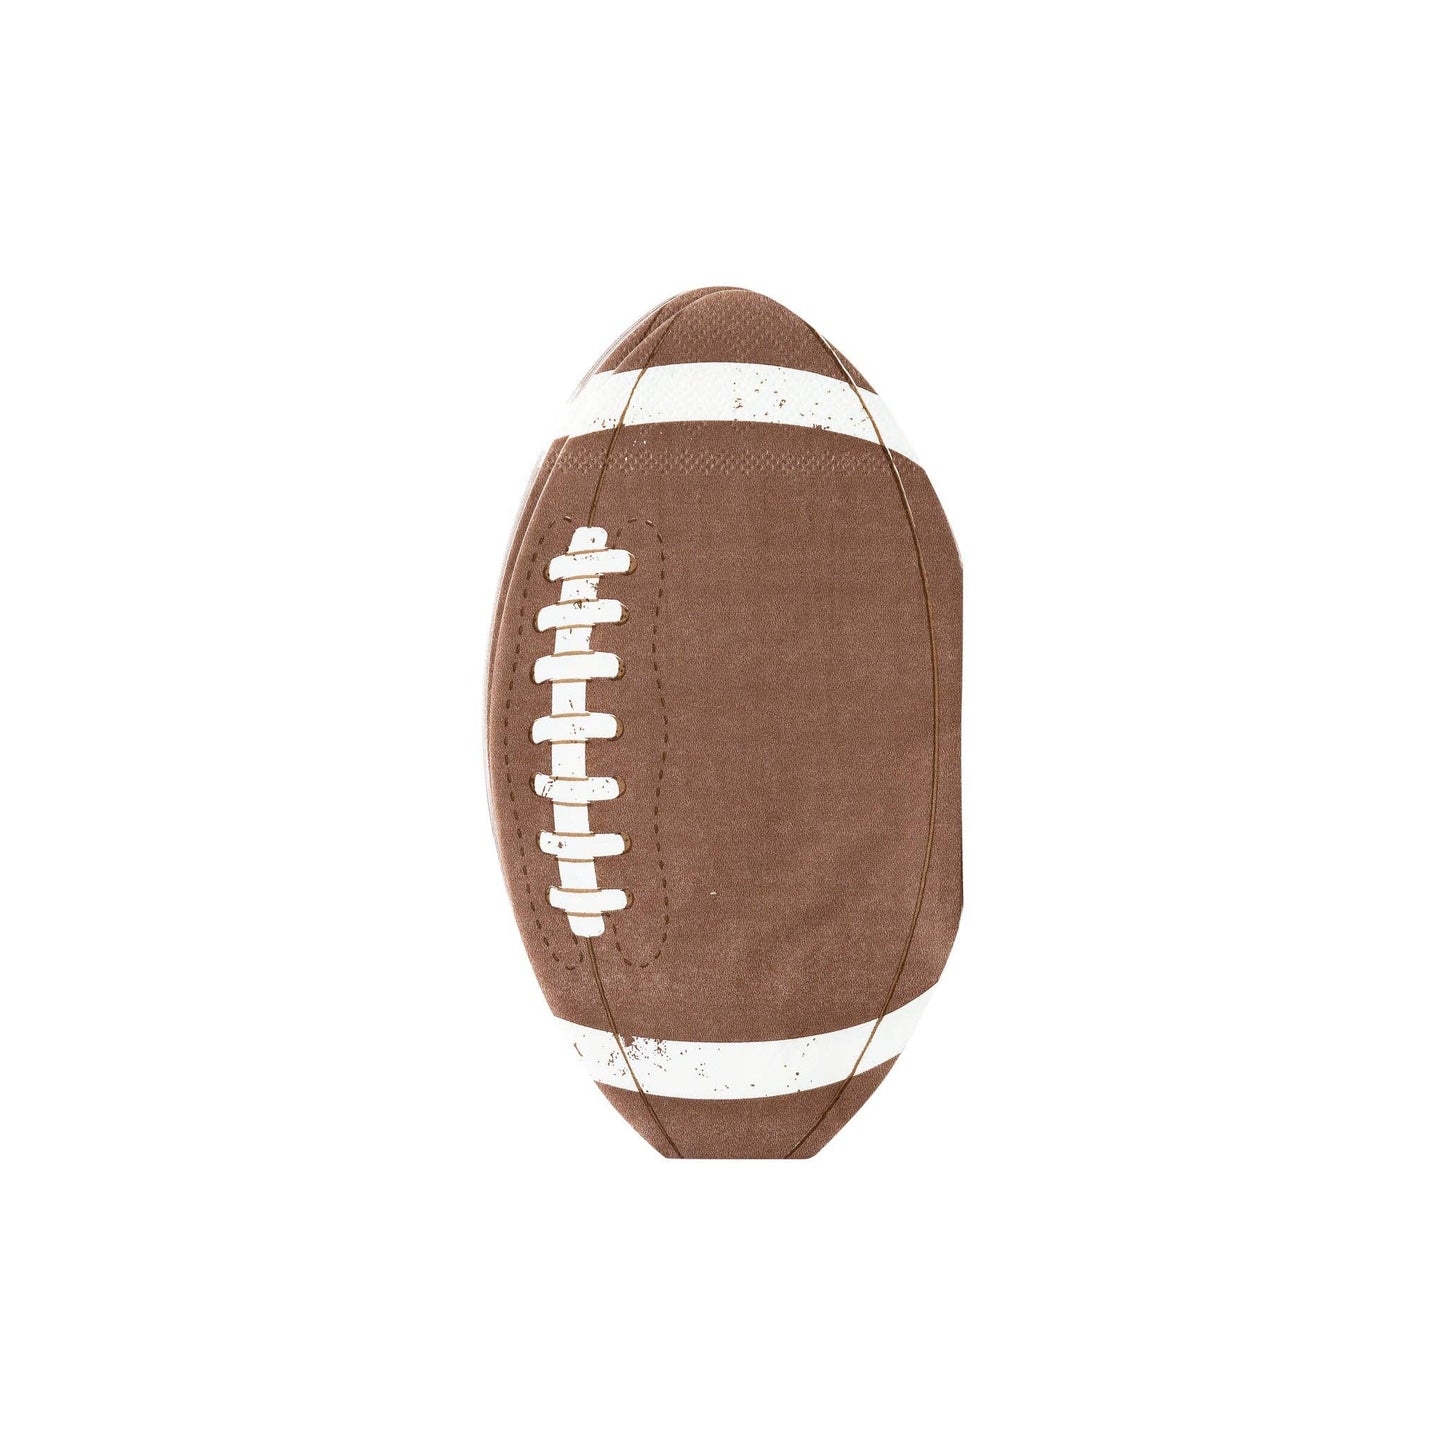 FTB939 -  Football Shape Disposable Napkin